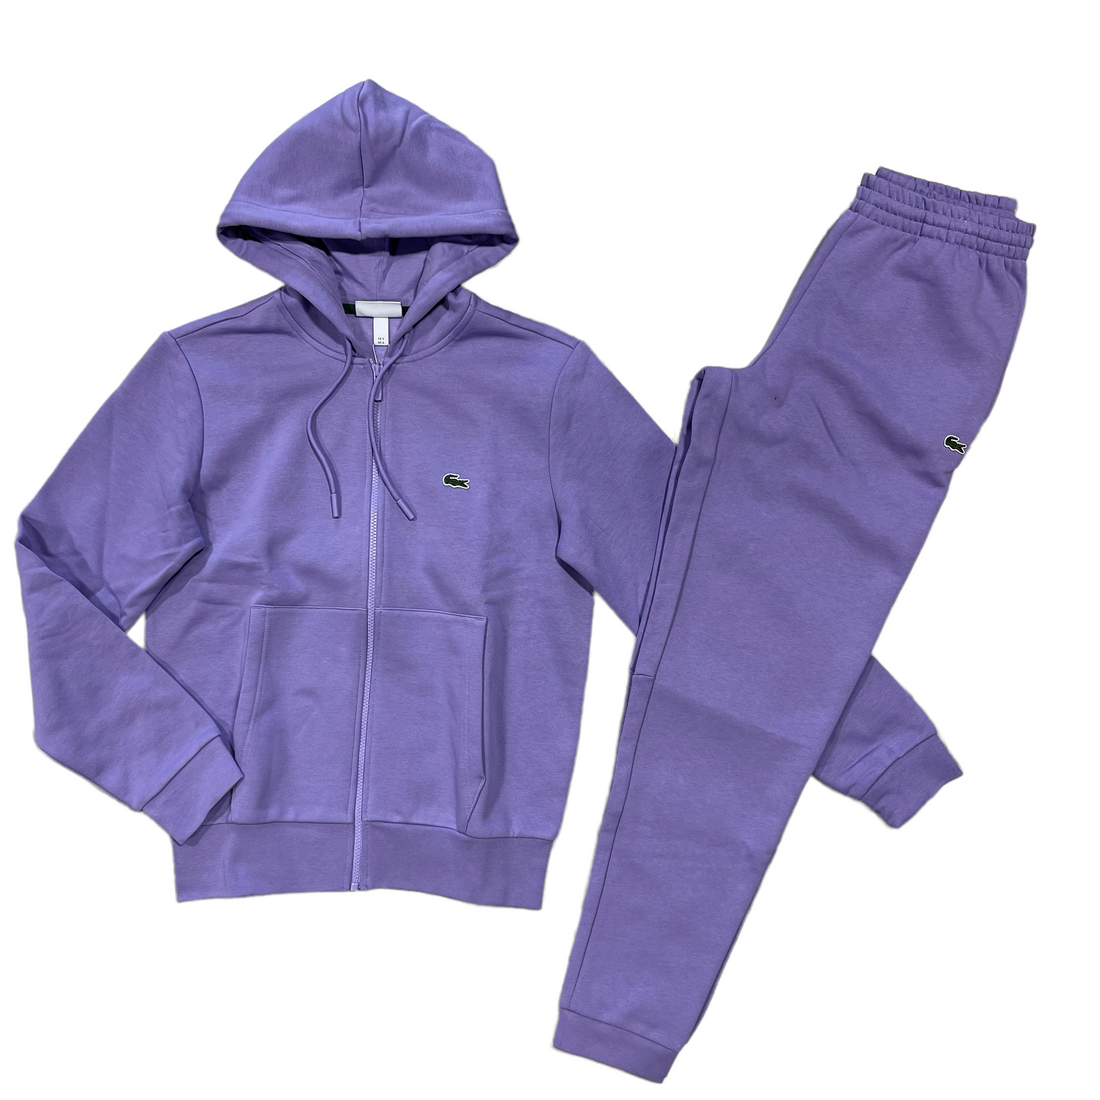 Lacoste Essential Jogging Suit (Neva Purple)